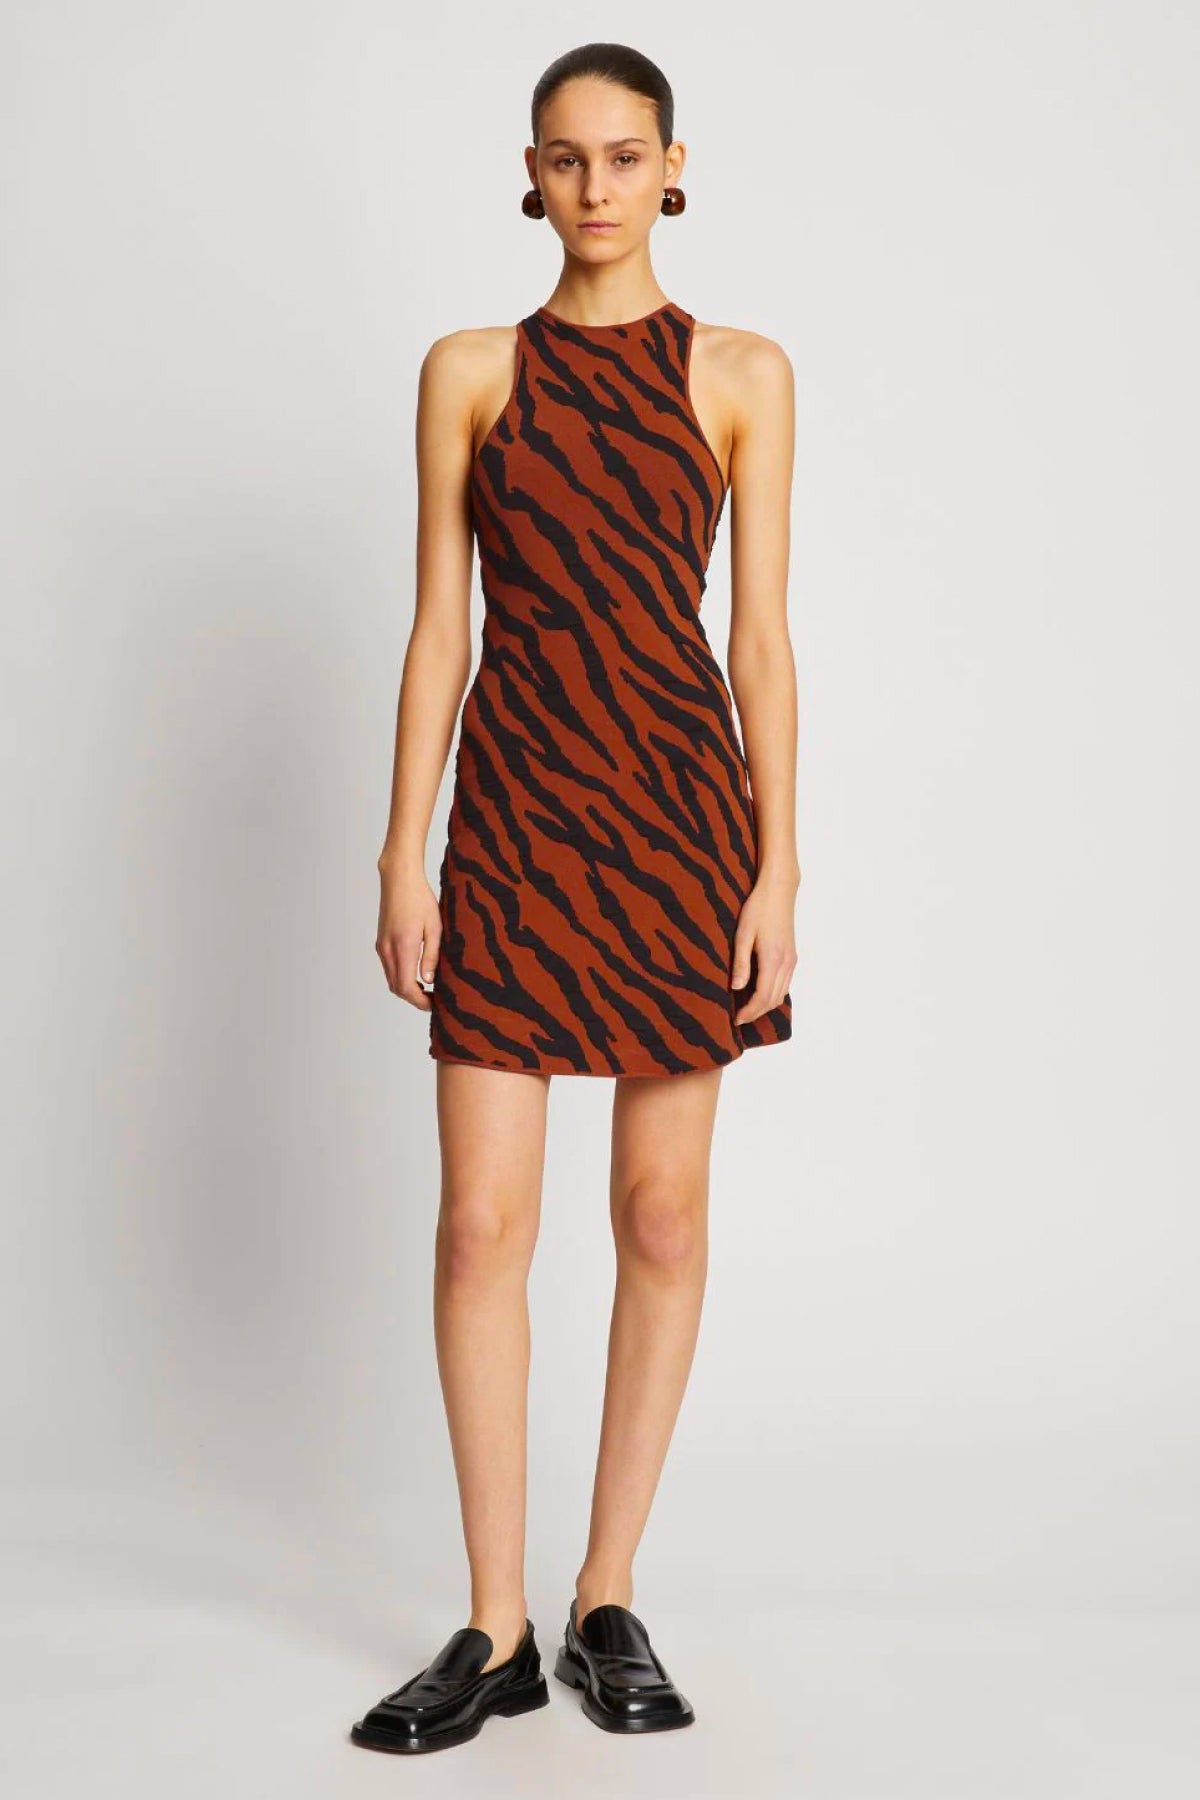 Proenza Schouler White Label Zebra Stripe Knit Dress - Honey/ Black